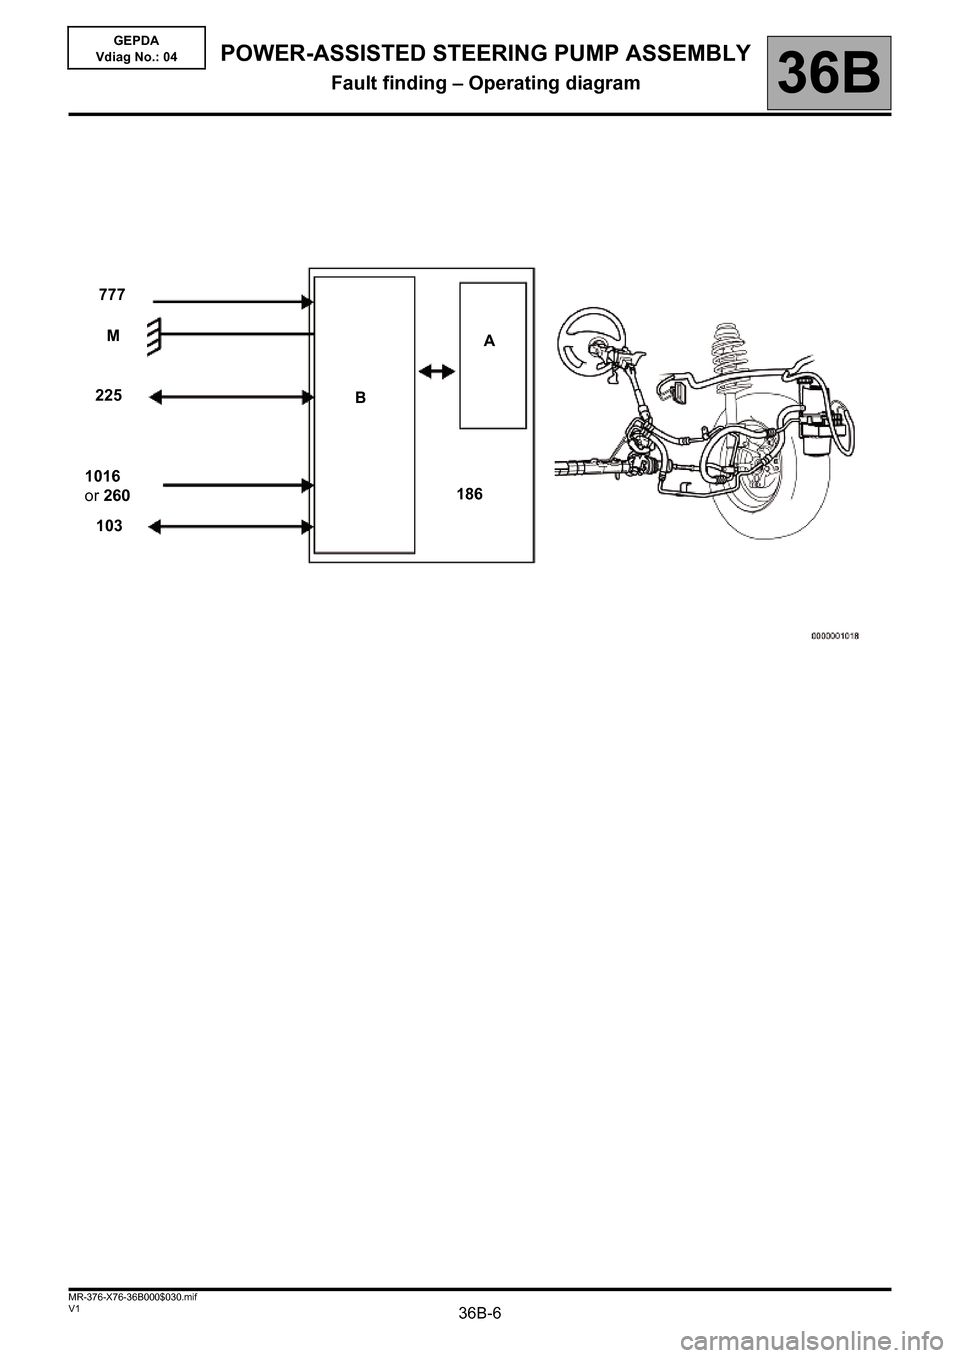 RENAULT KANGOO 2013 X61 / 2.G Power Steering Pump Assembly Workshop Manual 36B-6V1 MR-376-X76-36B000$030.mif
POWER-ASSISTED STEERING PUMP ASSEMBLY
Fault finding – Operating diagram36B
GEPDA
Vdiag No.: 04
777
M
225
1016 
or 260
103BA
186 